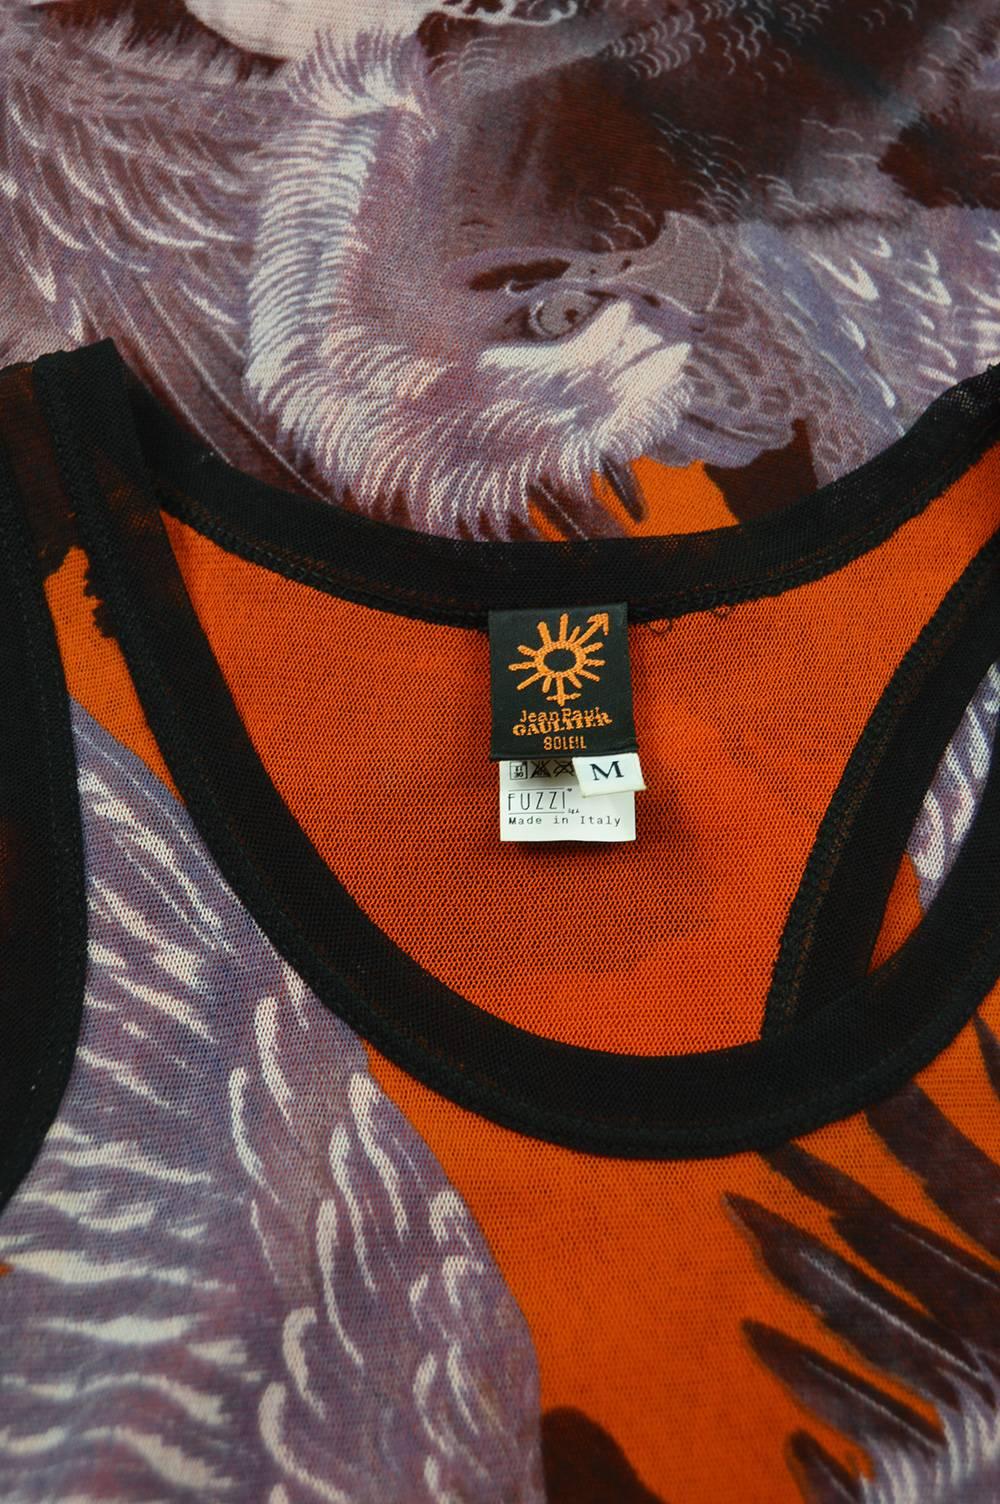 Jean Paul Gaultier Eagle Print Fuzzi Sleeveless Orange Mesh Maxi Dress 3